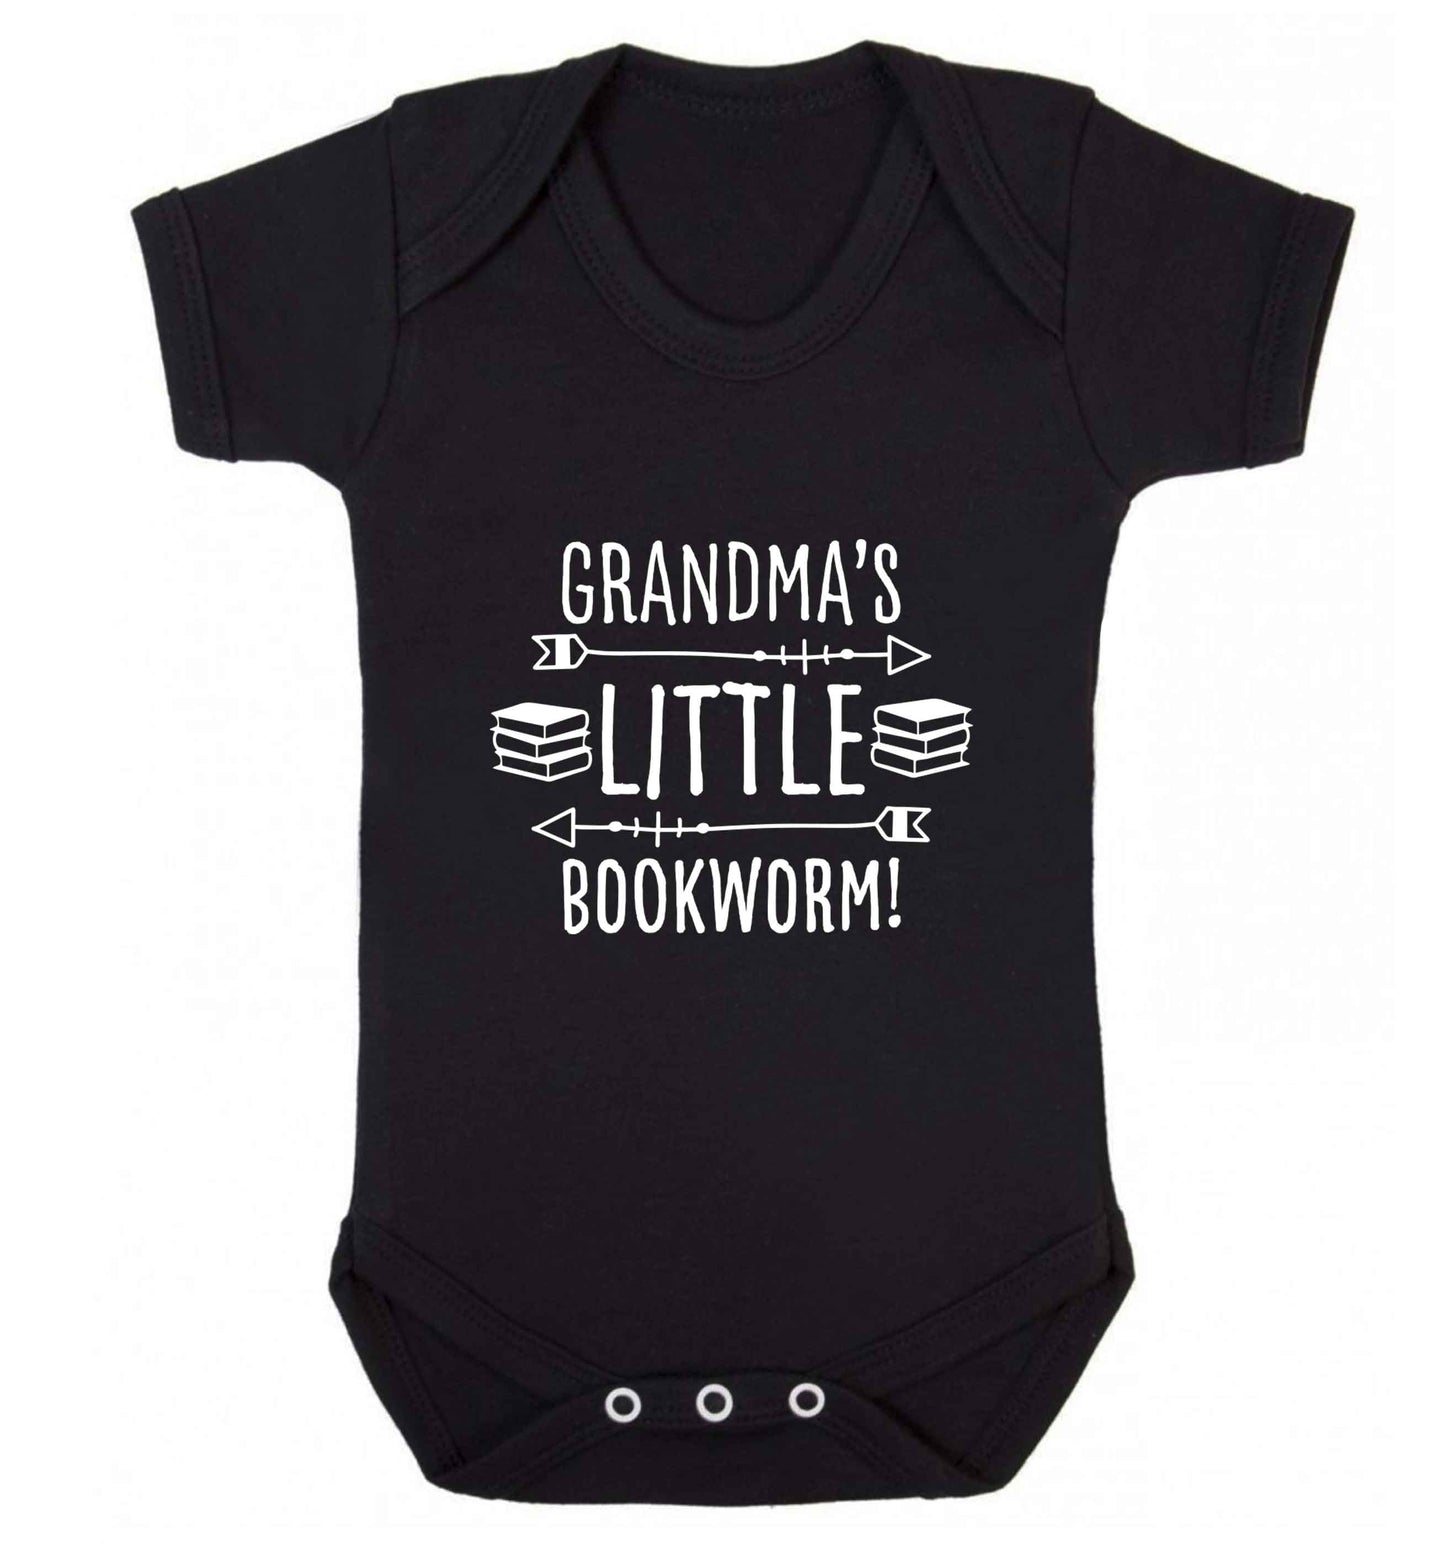 Grandma's little bookworm baby vest black 18-24 months